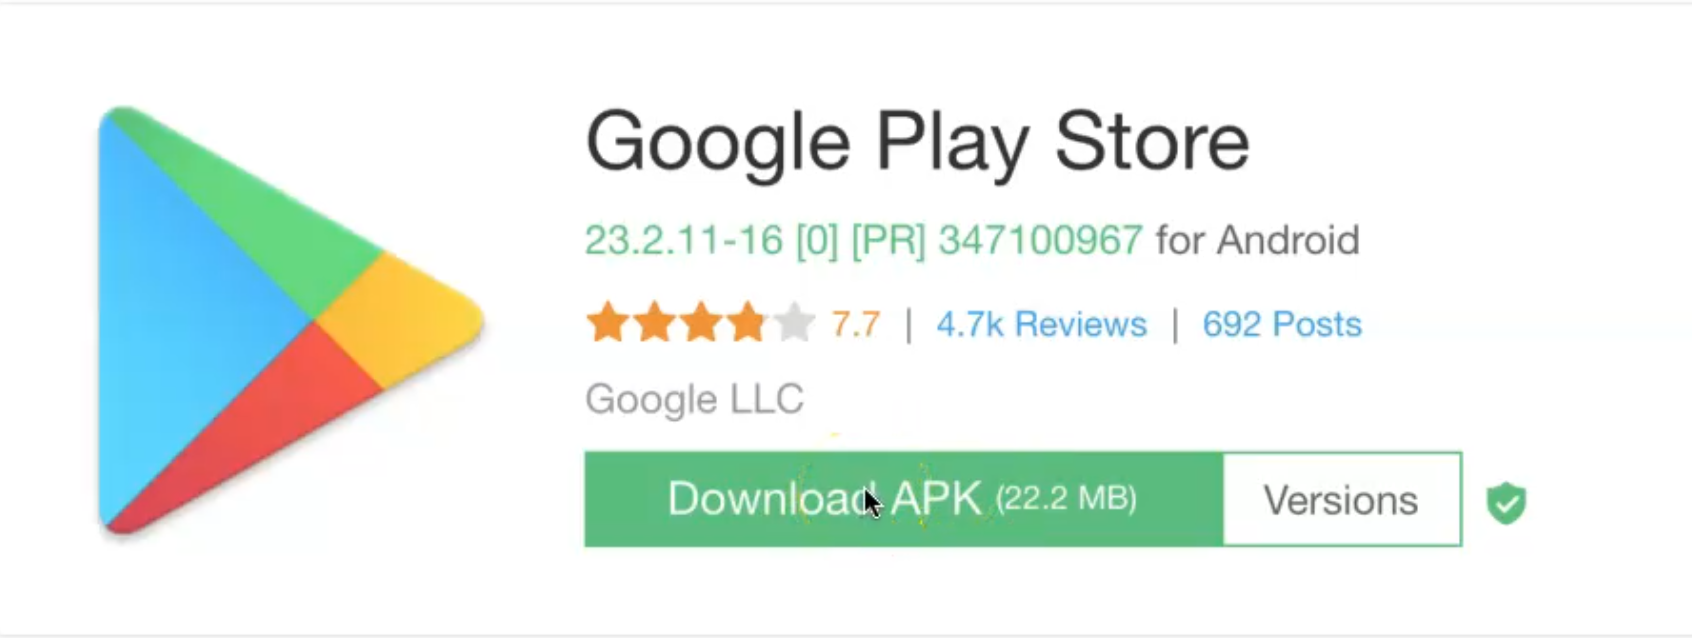 Google Play. Google Play Store. Google Play Маркет. Android Play Store. Гугл плей версия старую версию